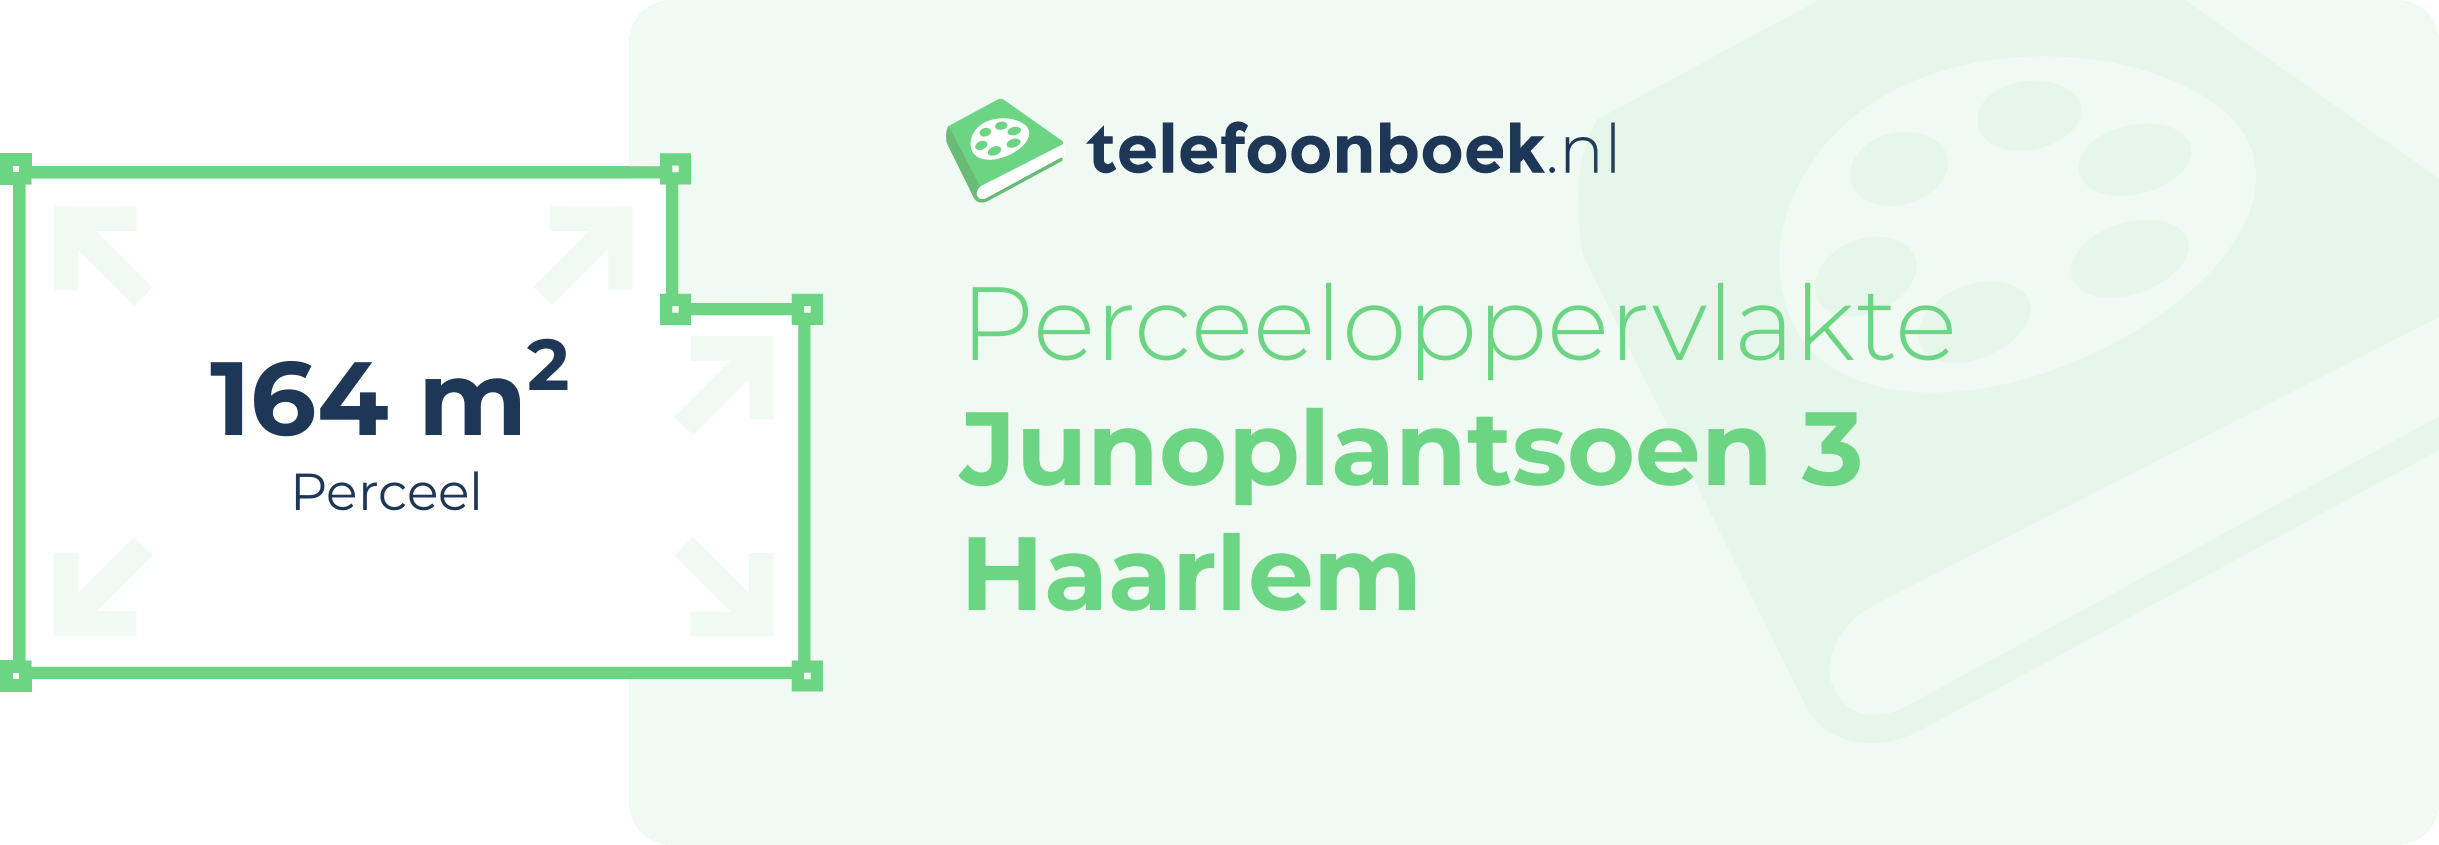 Perceeloppervlakte Junoplantsoen 3 Haarlem